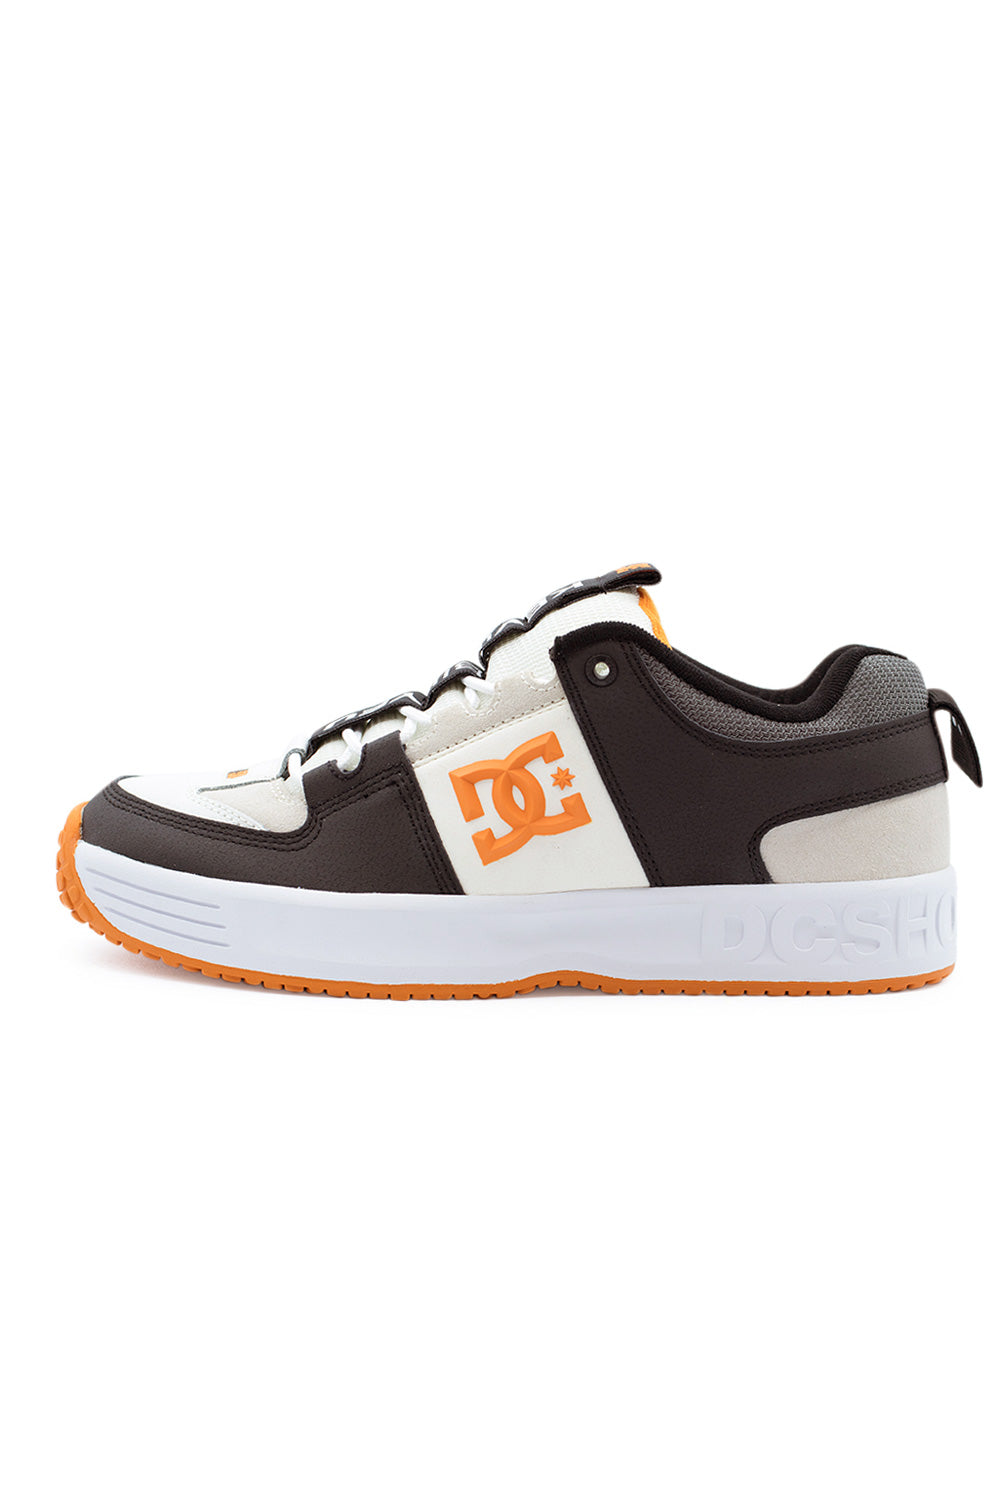 DC Shoes Lynx OG Shoe (Kevin Bilyeu) Black / Orange - BONKERS